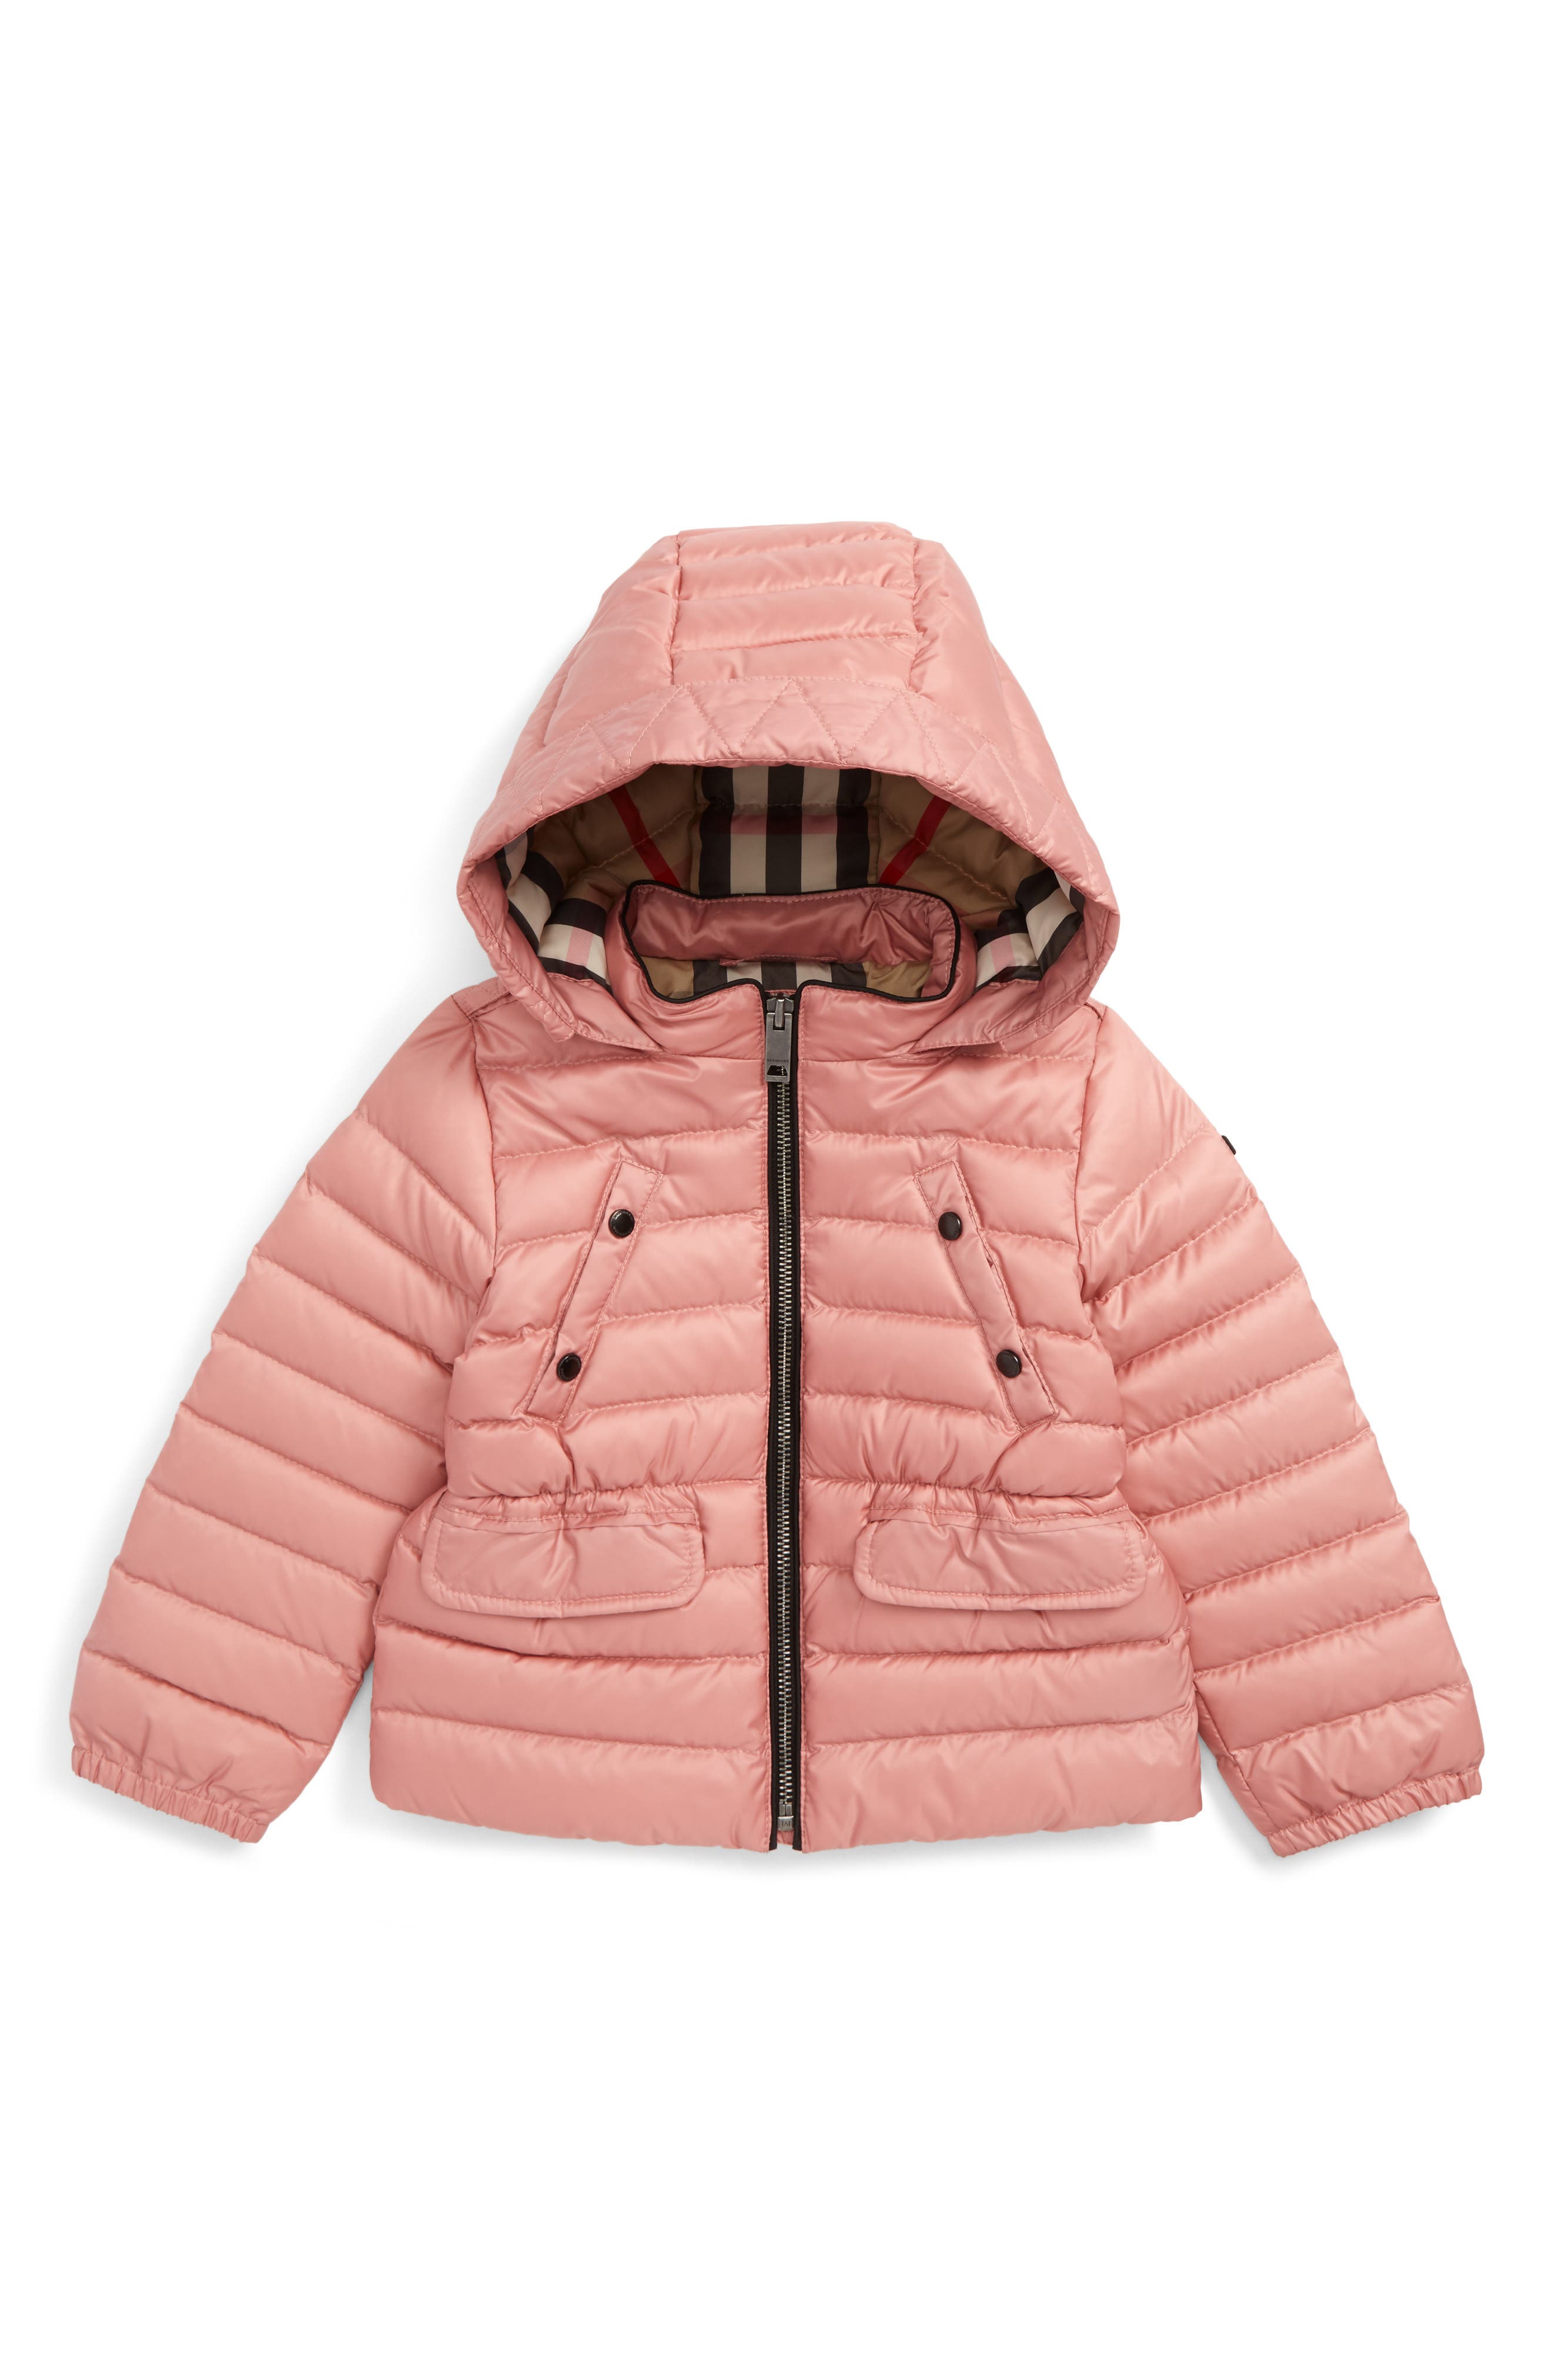 burberry jacket toddler girl